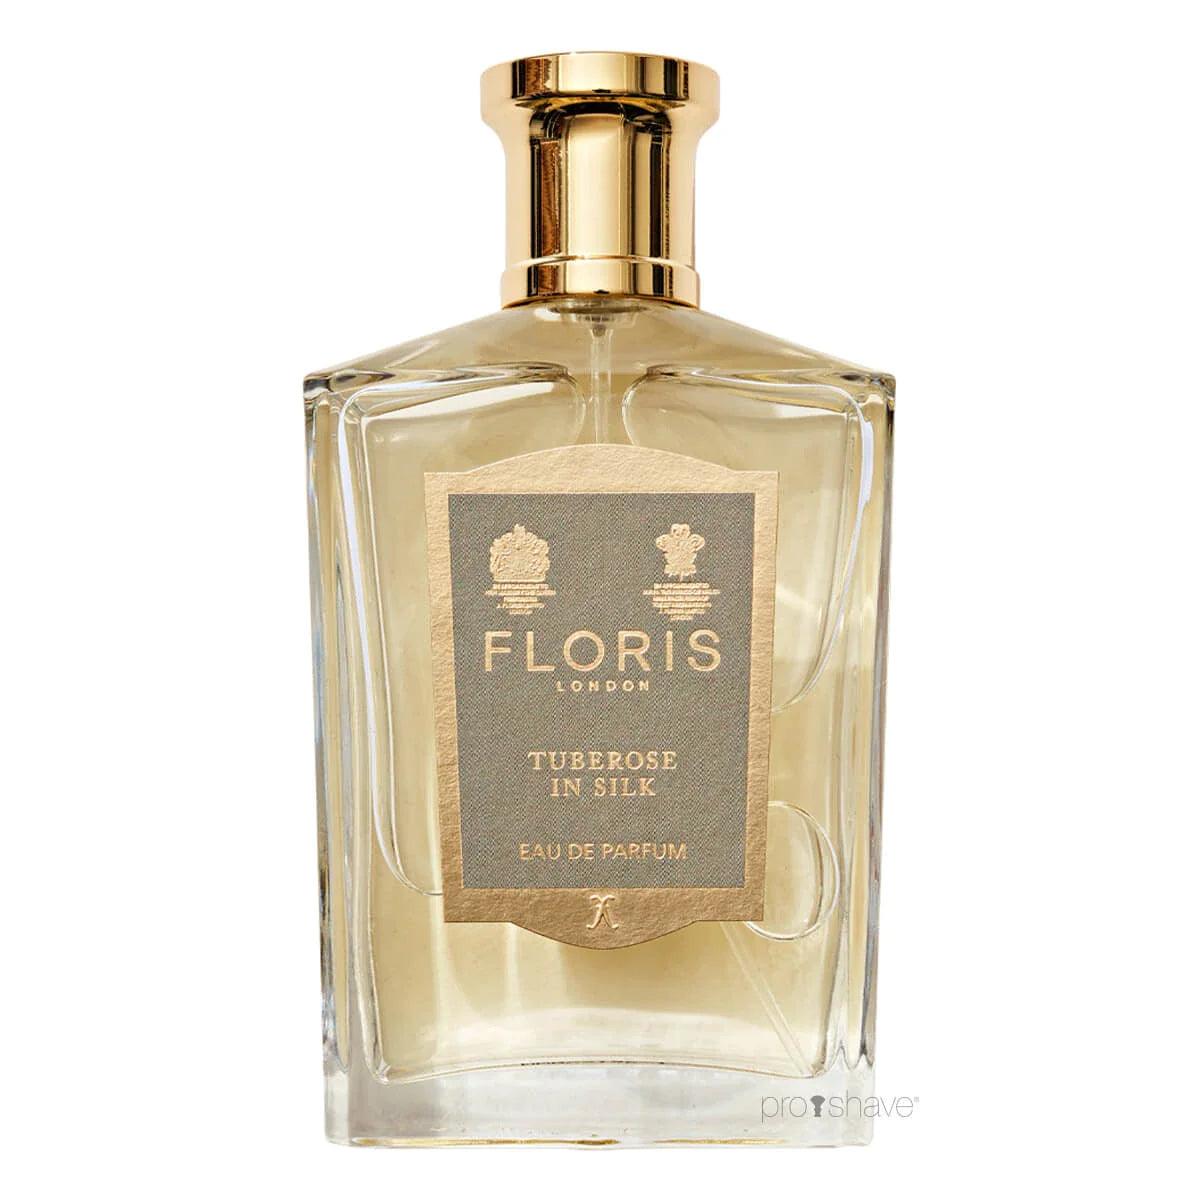 Floris Tuberose In Silk, Eau de Parfum, 2 ml | Parfyme | Floris London | JK SHOP | JK Barber og herre frisør | Lavepriser | Best